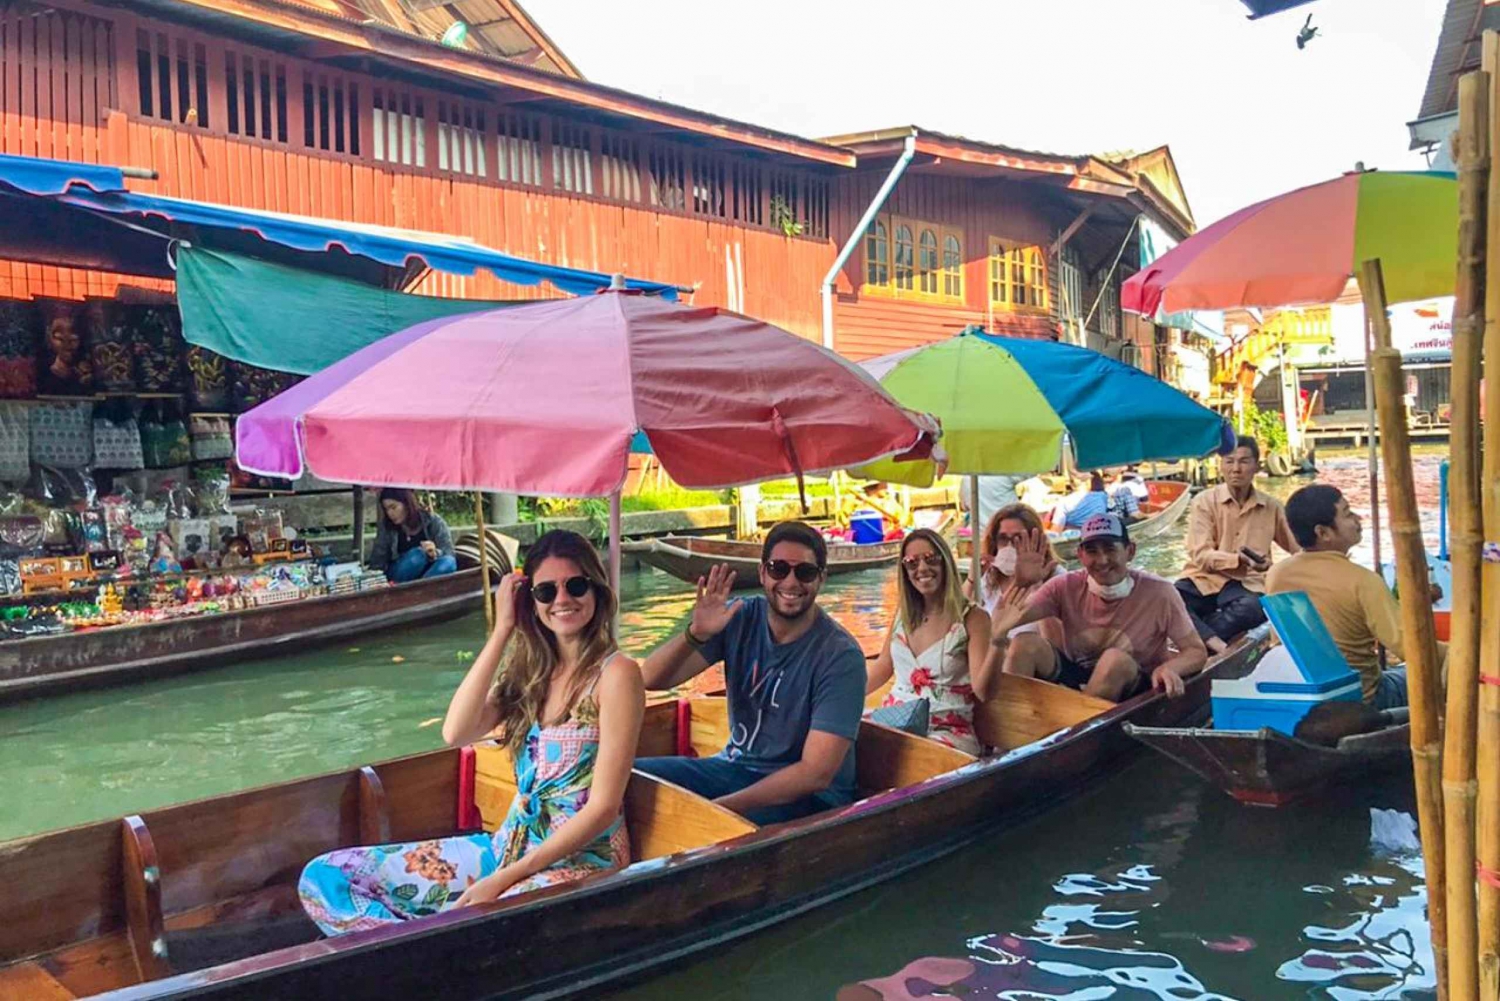 From Bangkok: Markets and Ayutthaya with spanish guide